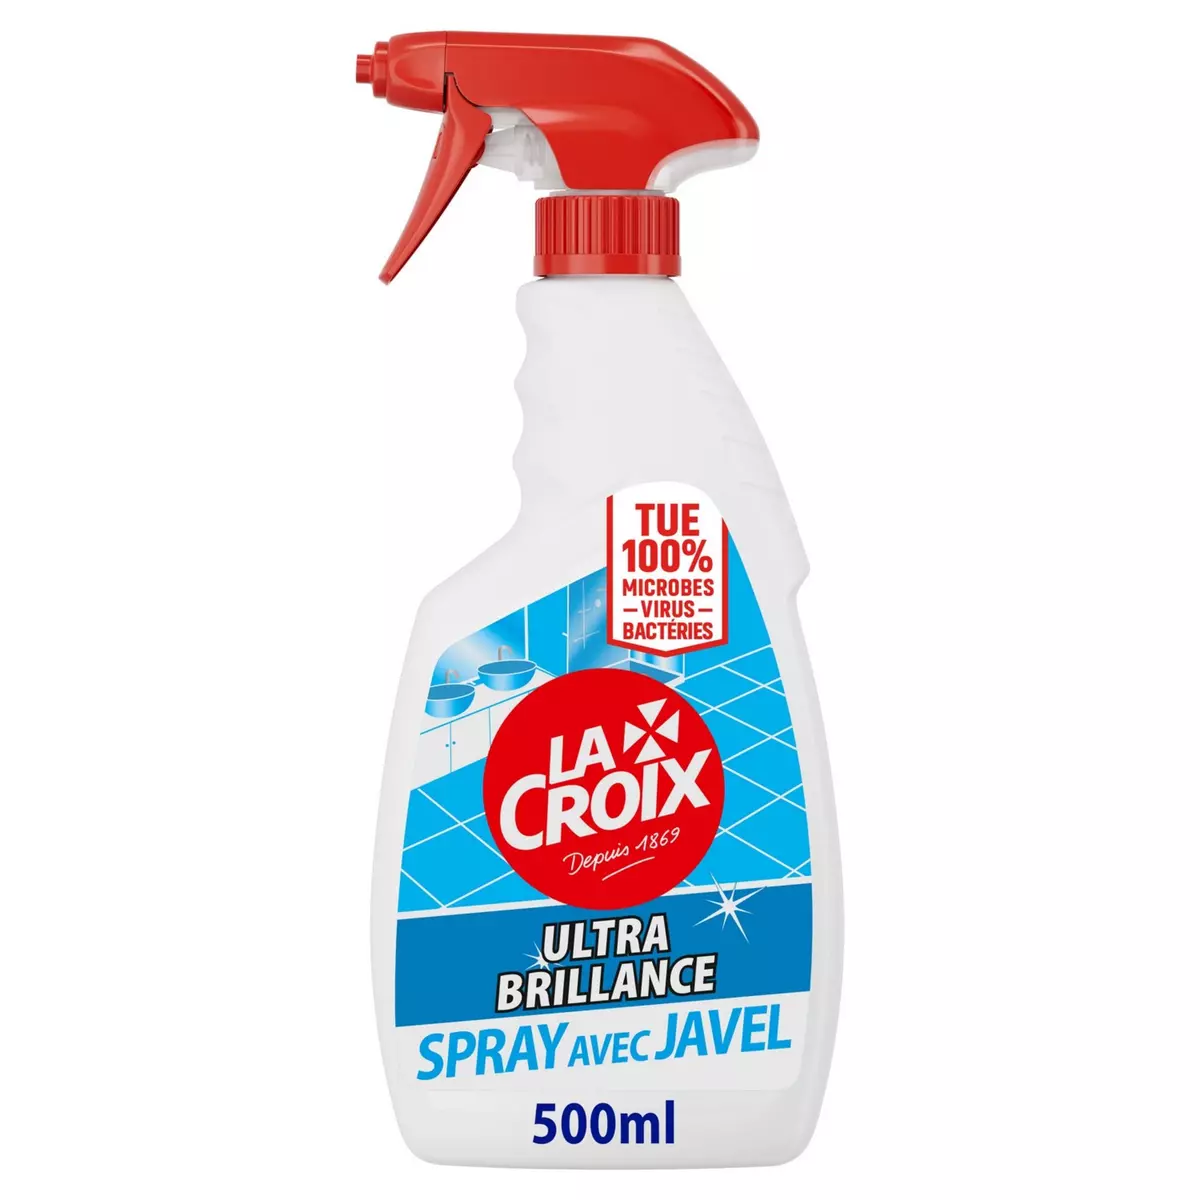 Spray nettoyant javel brillance Cif 750ml sur